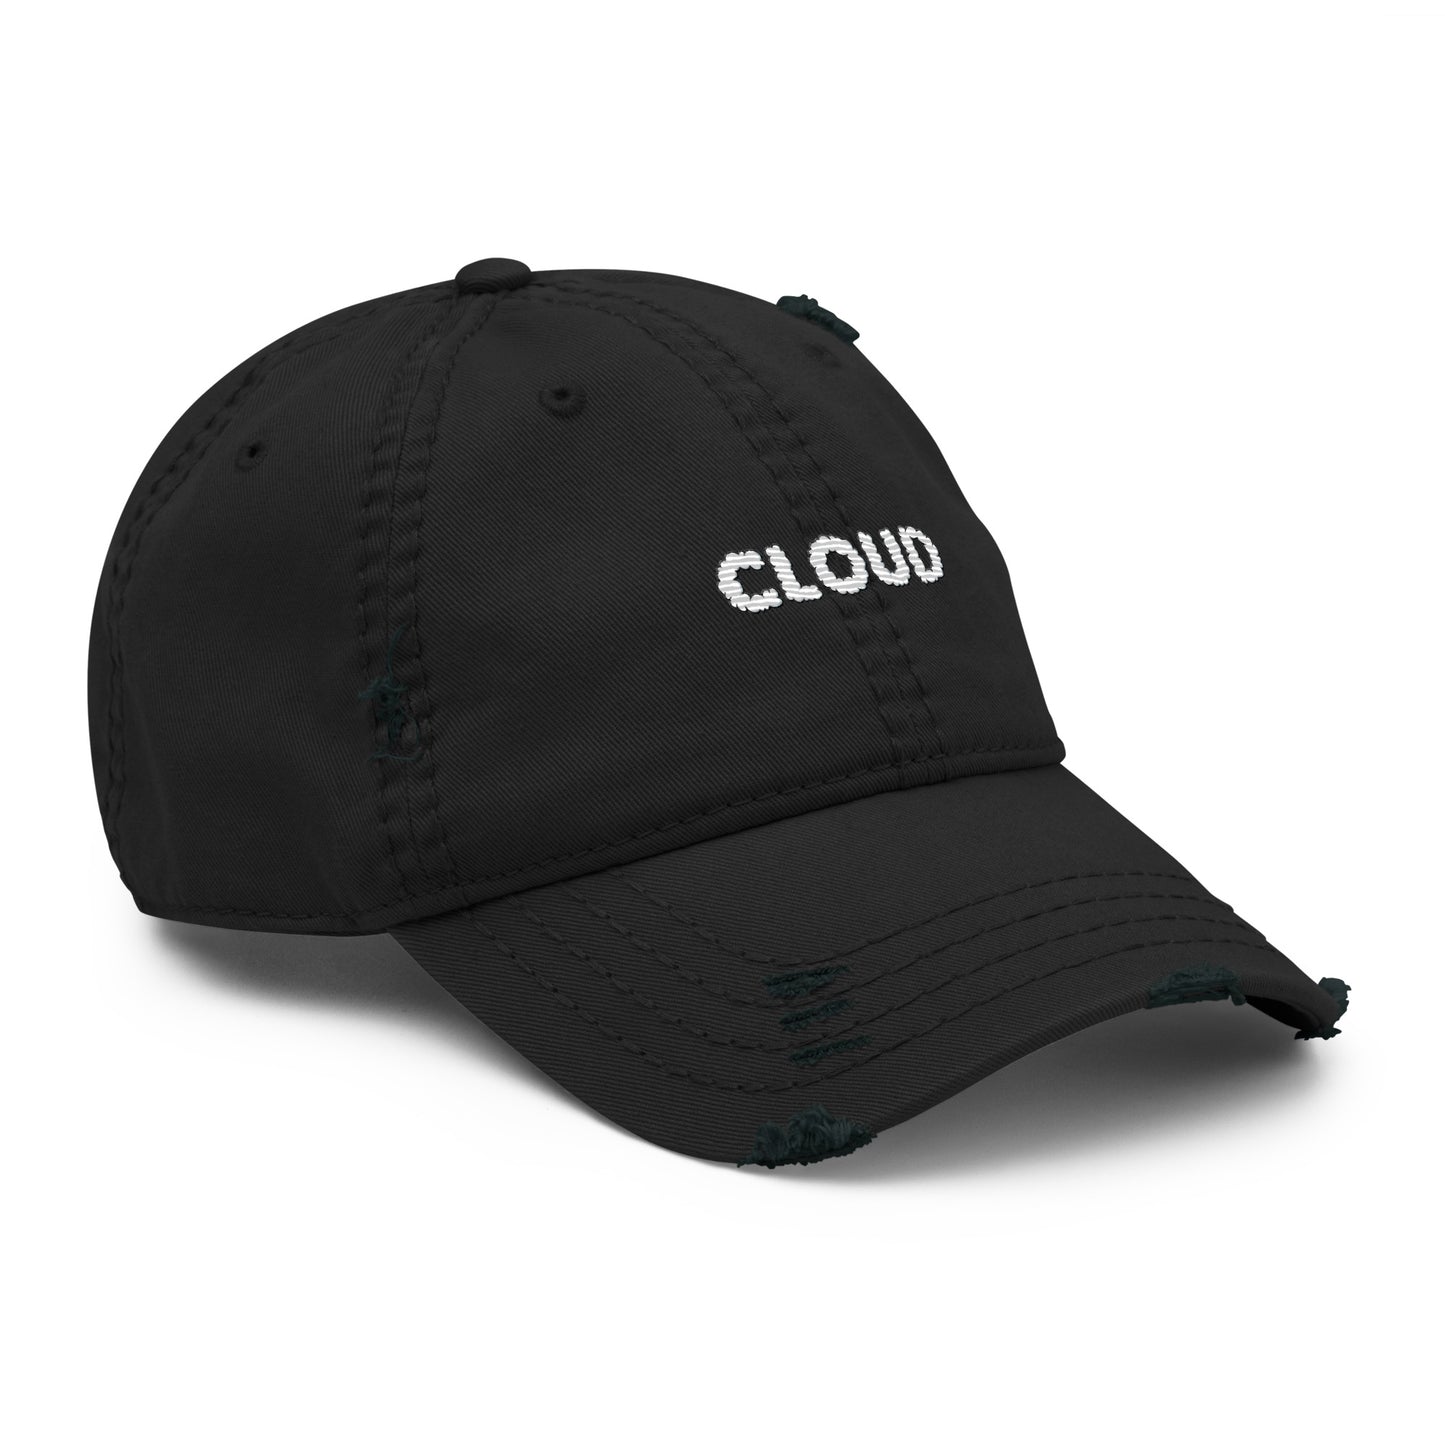 Trucker Cap with Cloud Symbol